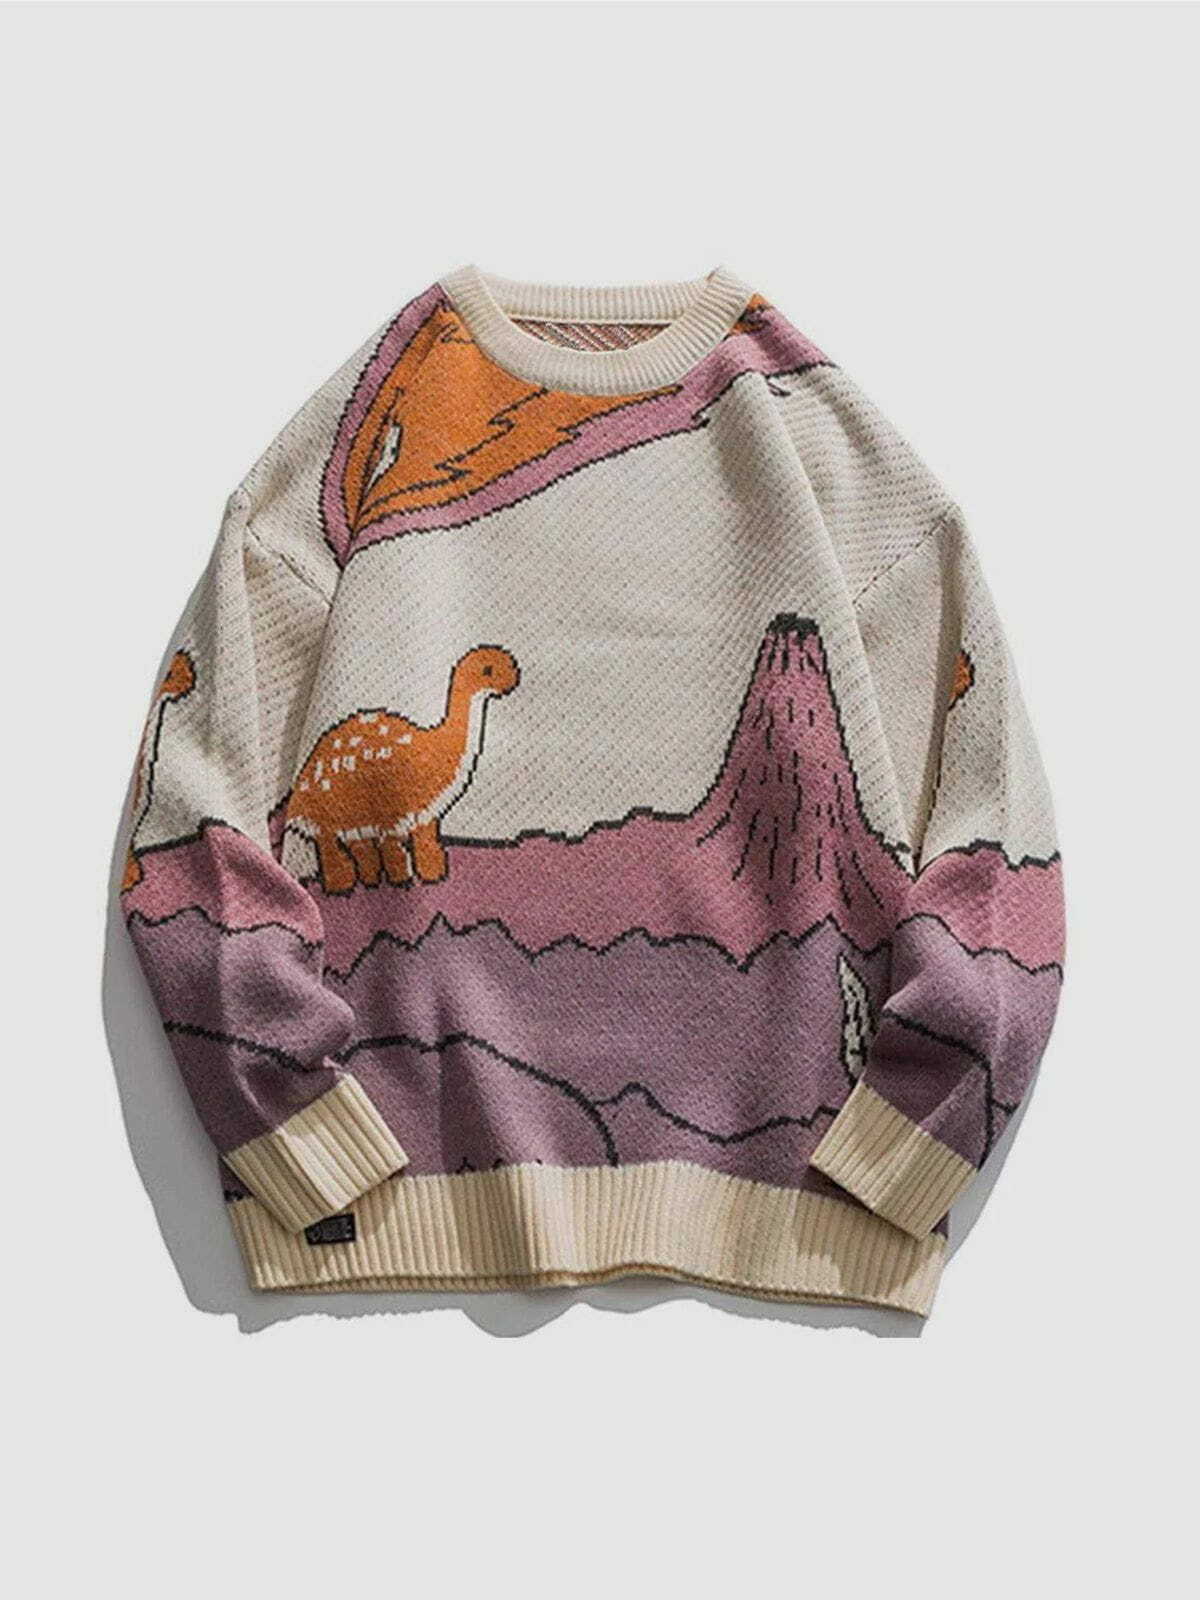 dino print knit sweater quirky & retro streetwear charm 3336